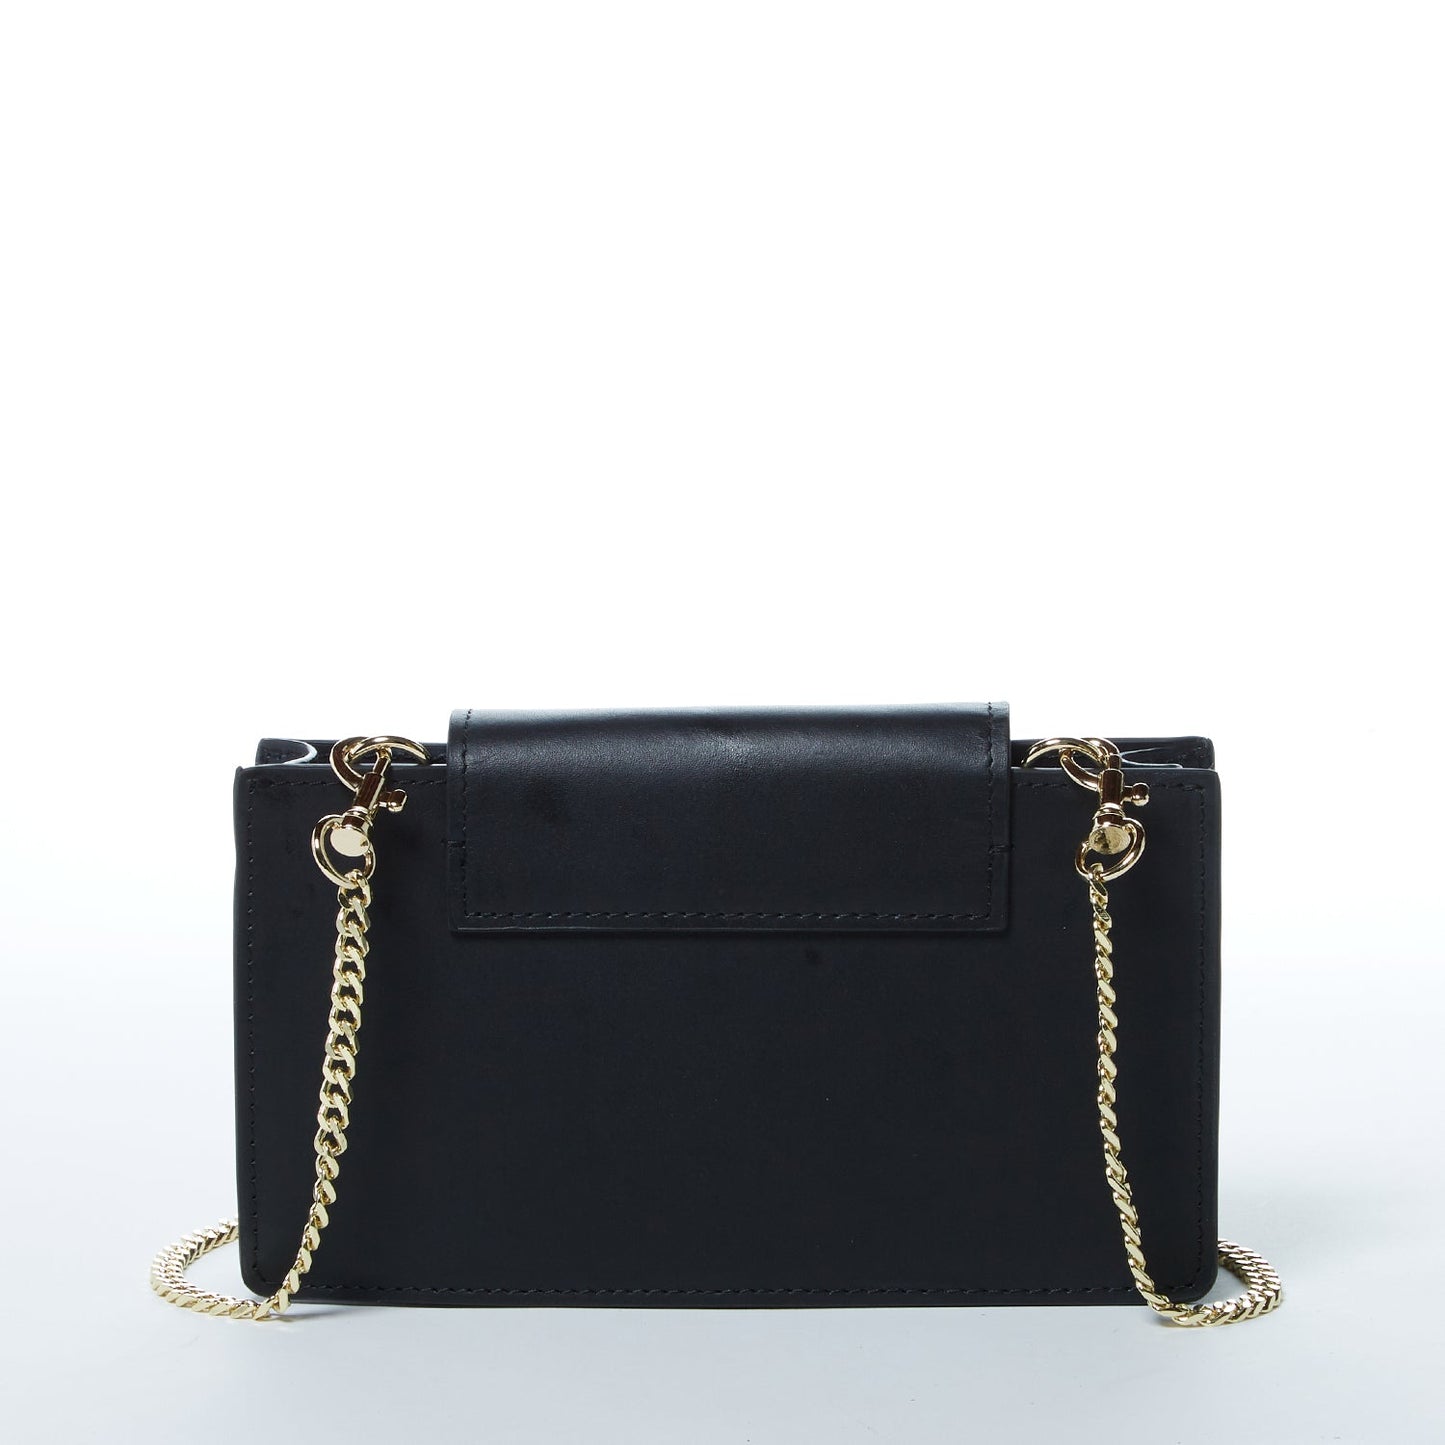 Mary Mini Crossbody Bag Black Leopard Leather Wristlet